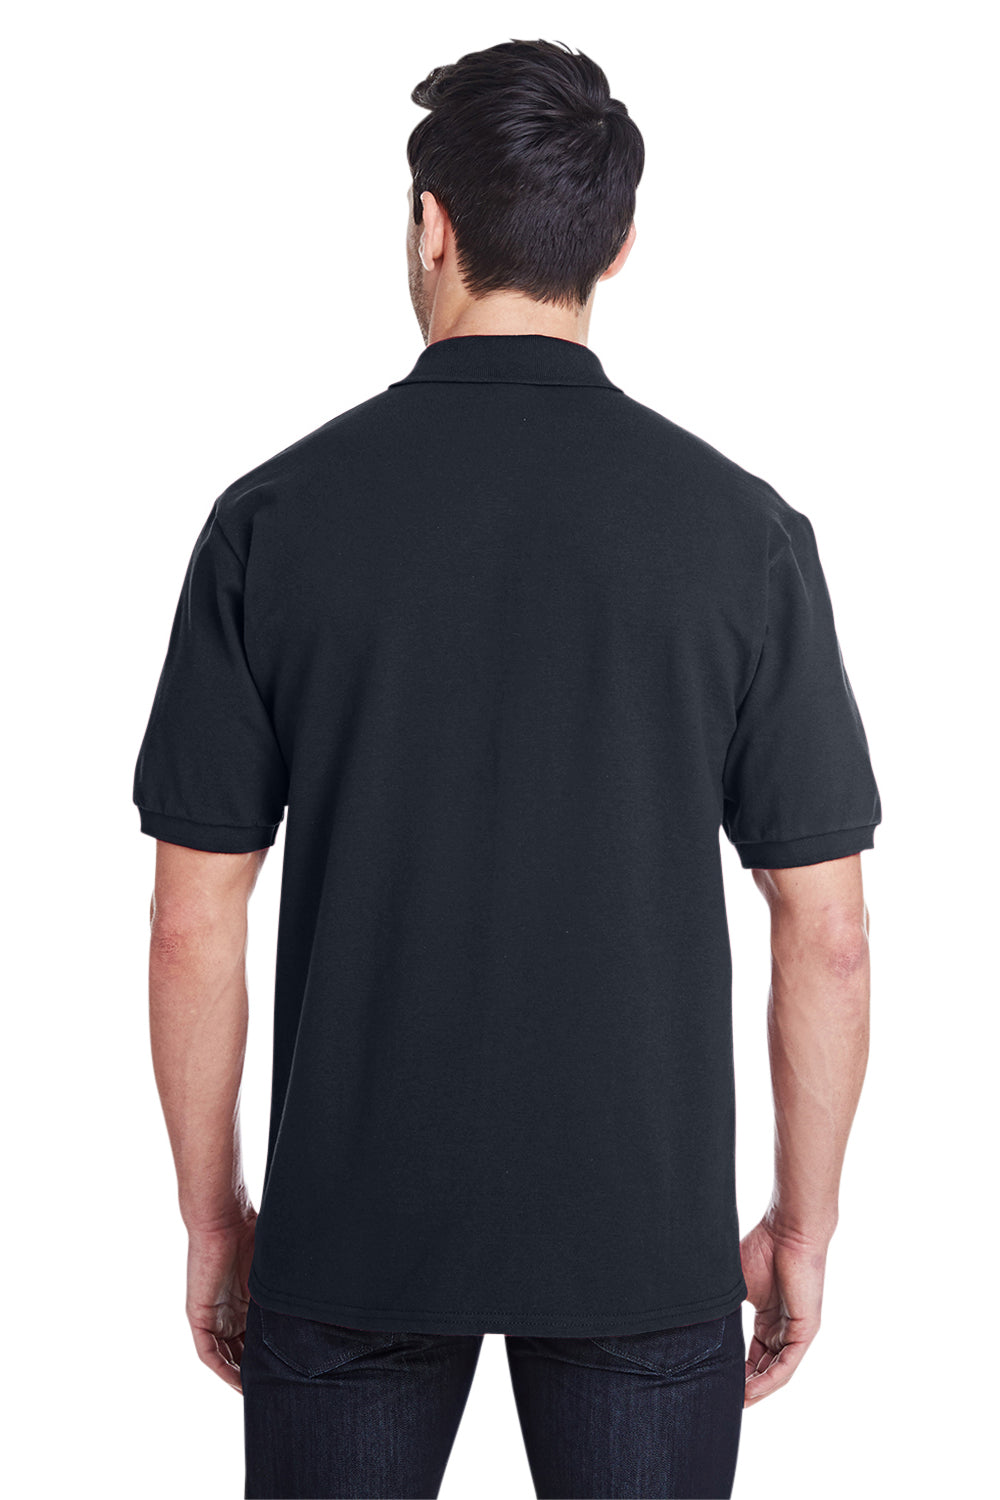 Jerzees 443MR Mens Short Sleeve Polo Shirt Black Back